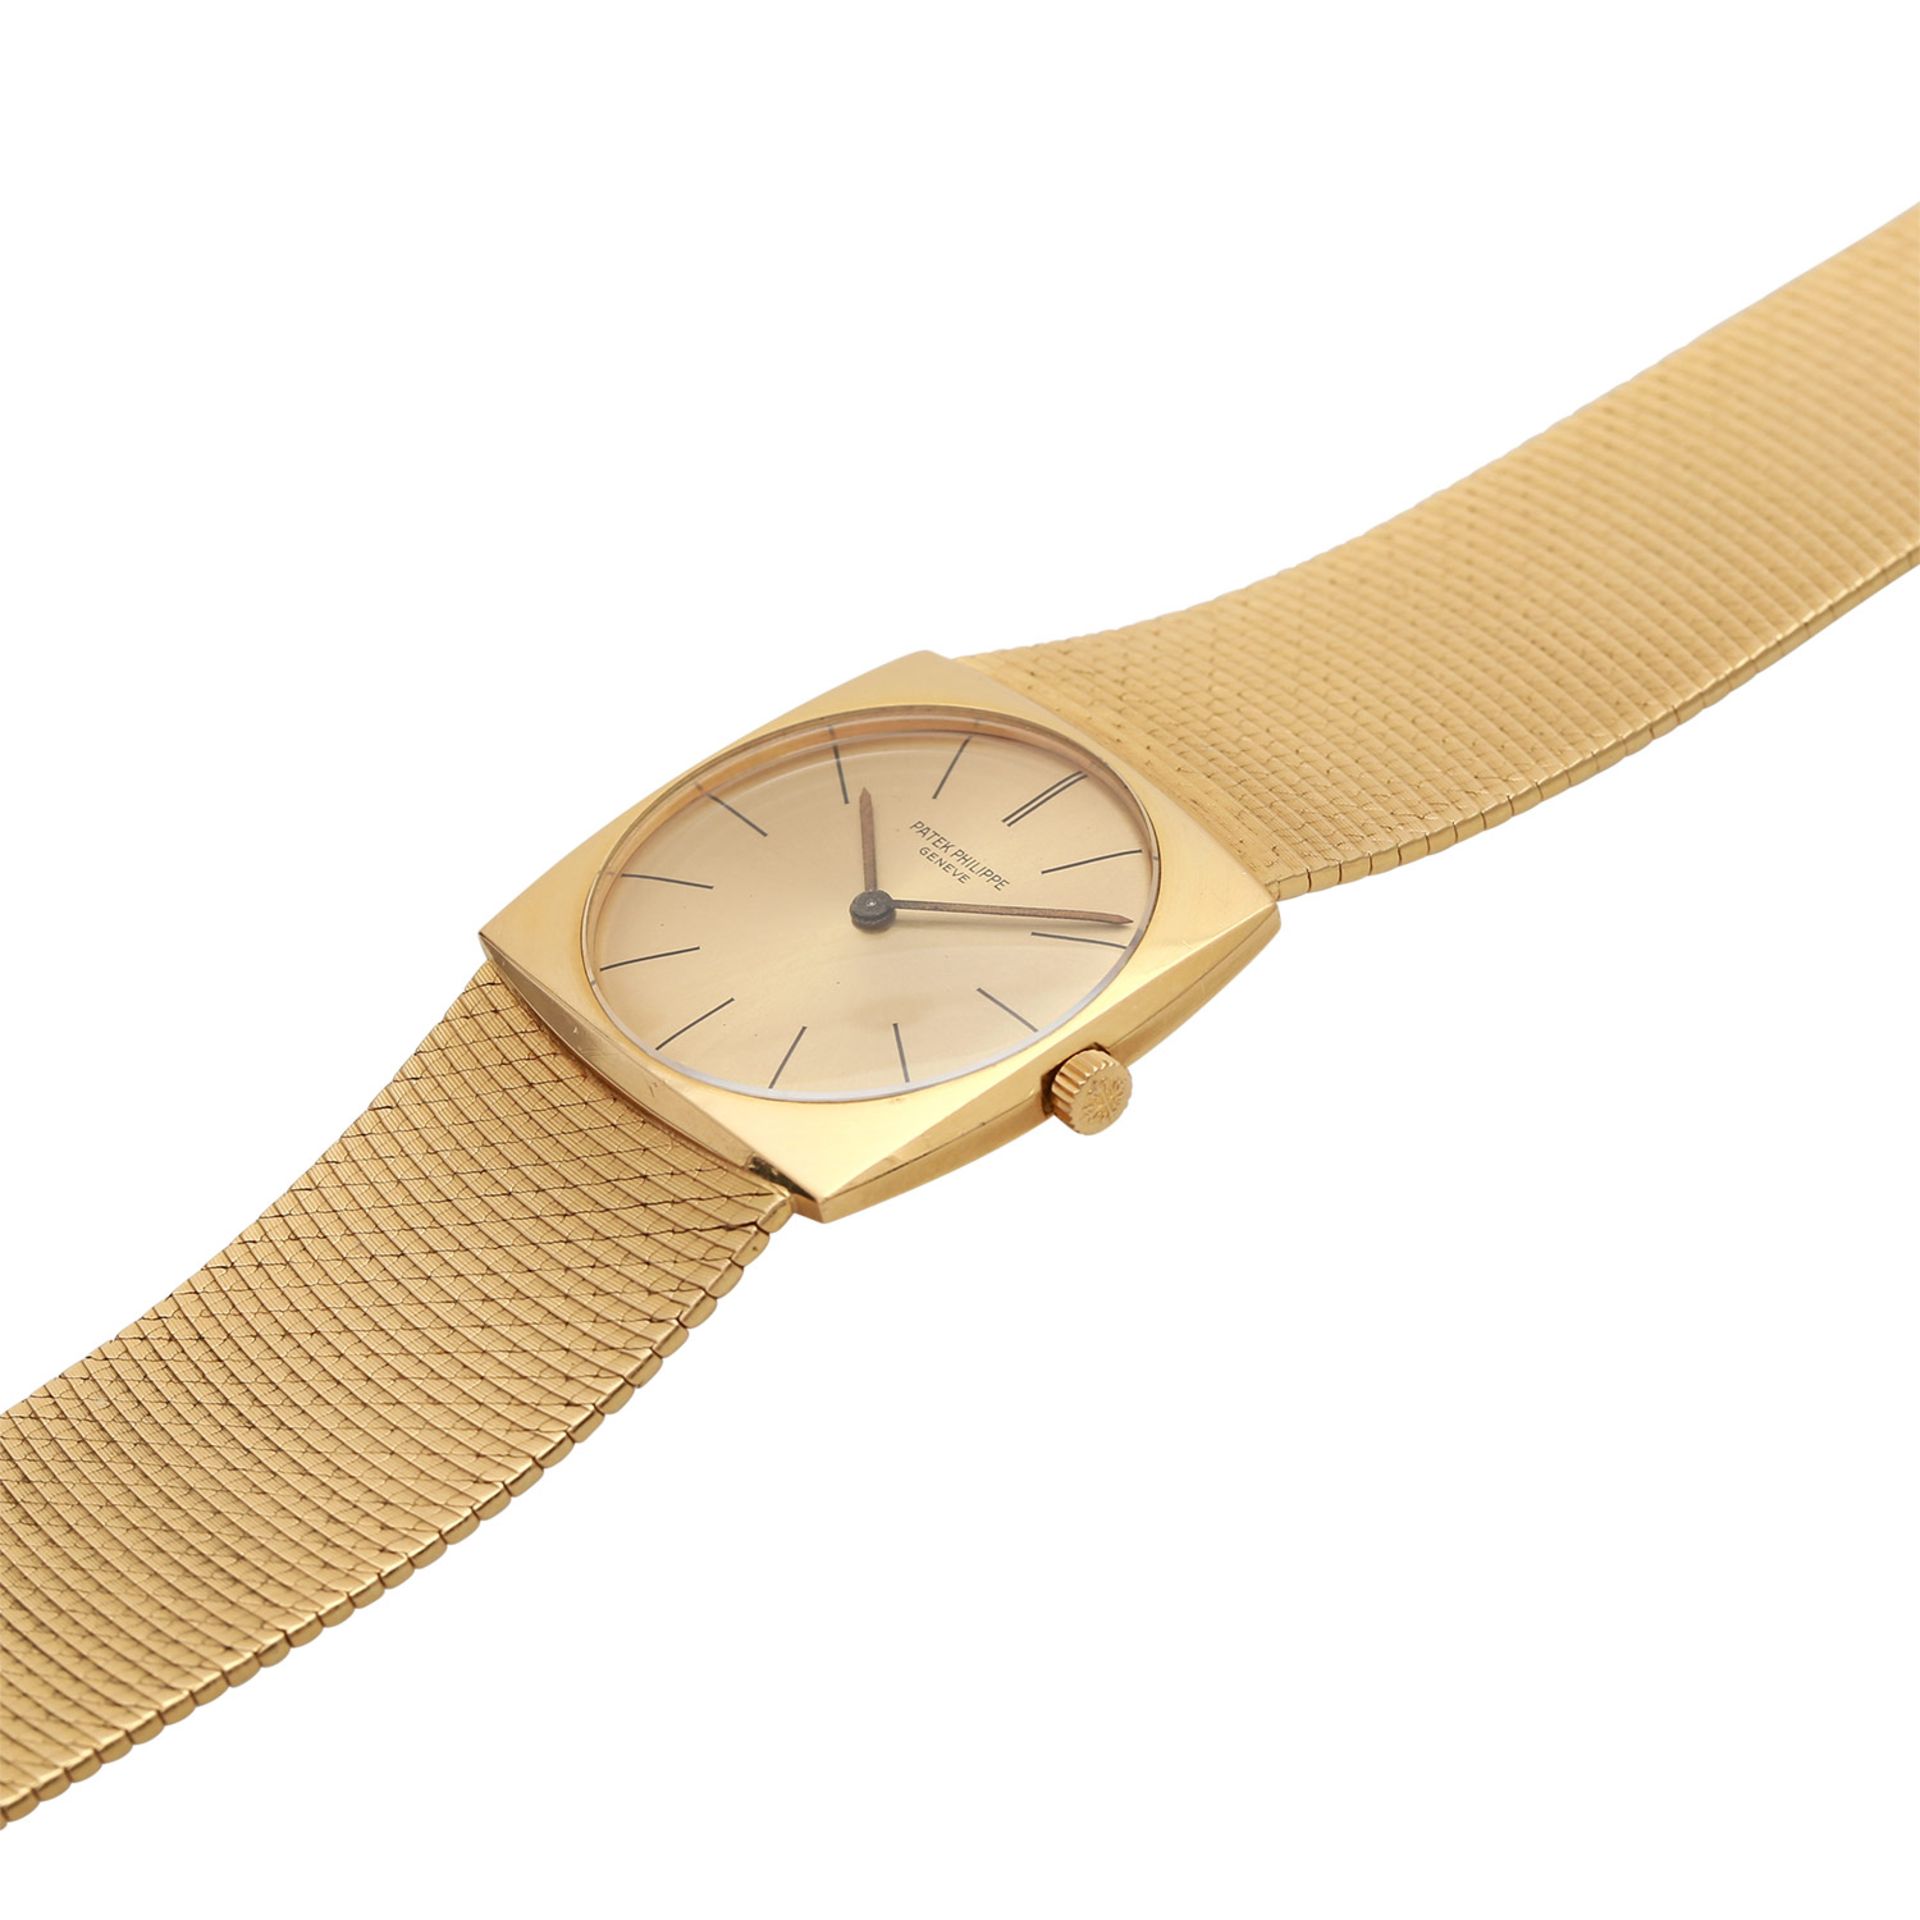 PATEK PHILIPPE Vintage Armbanduhr, Ref. 3523/1, ca. 1960er Jahre.Gold 18K. Handaufzugwerk, Cal. 175. - Bild 4 aus 9